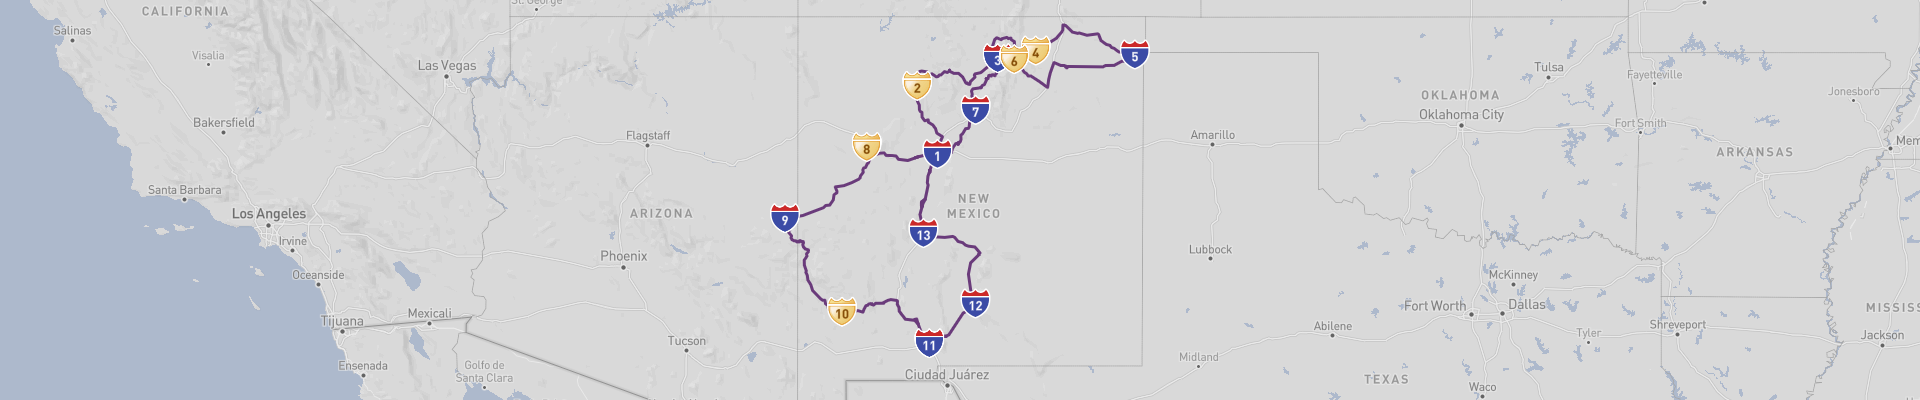 New Mexico Roadtrip